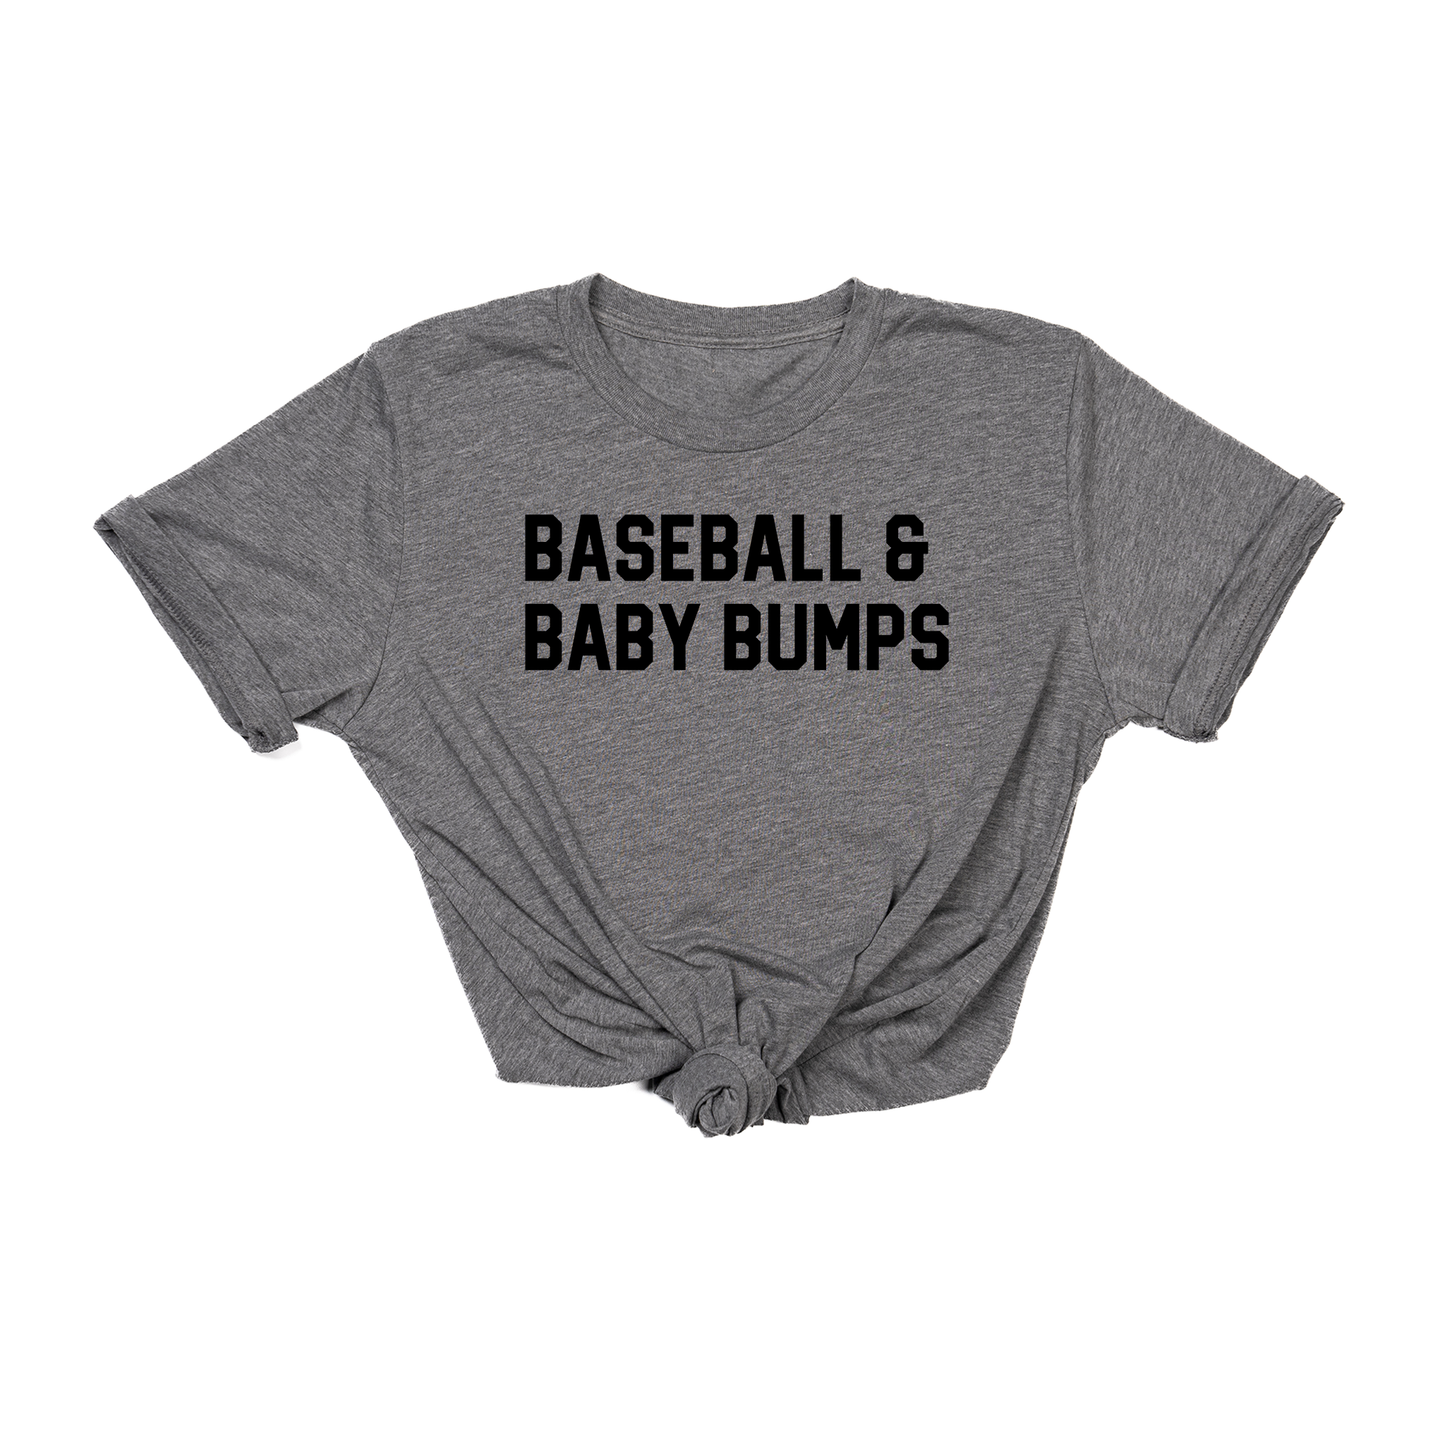 Baseball & Baby Bumps (Black) - Tee (Gray)